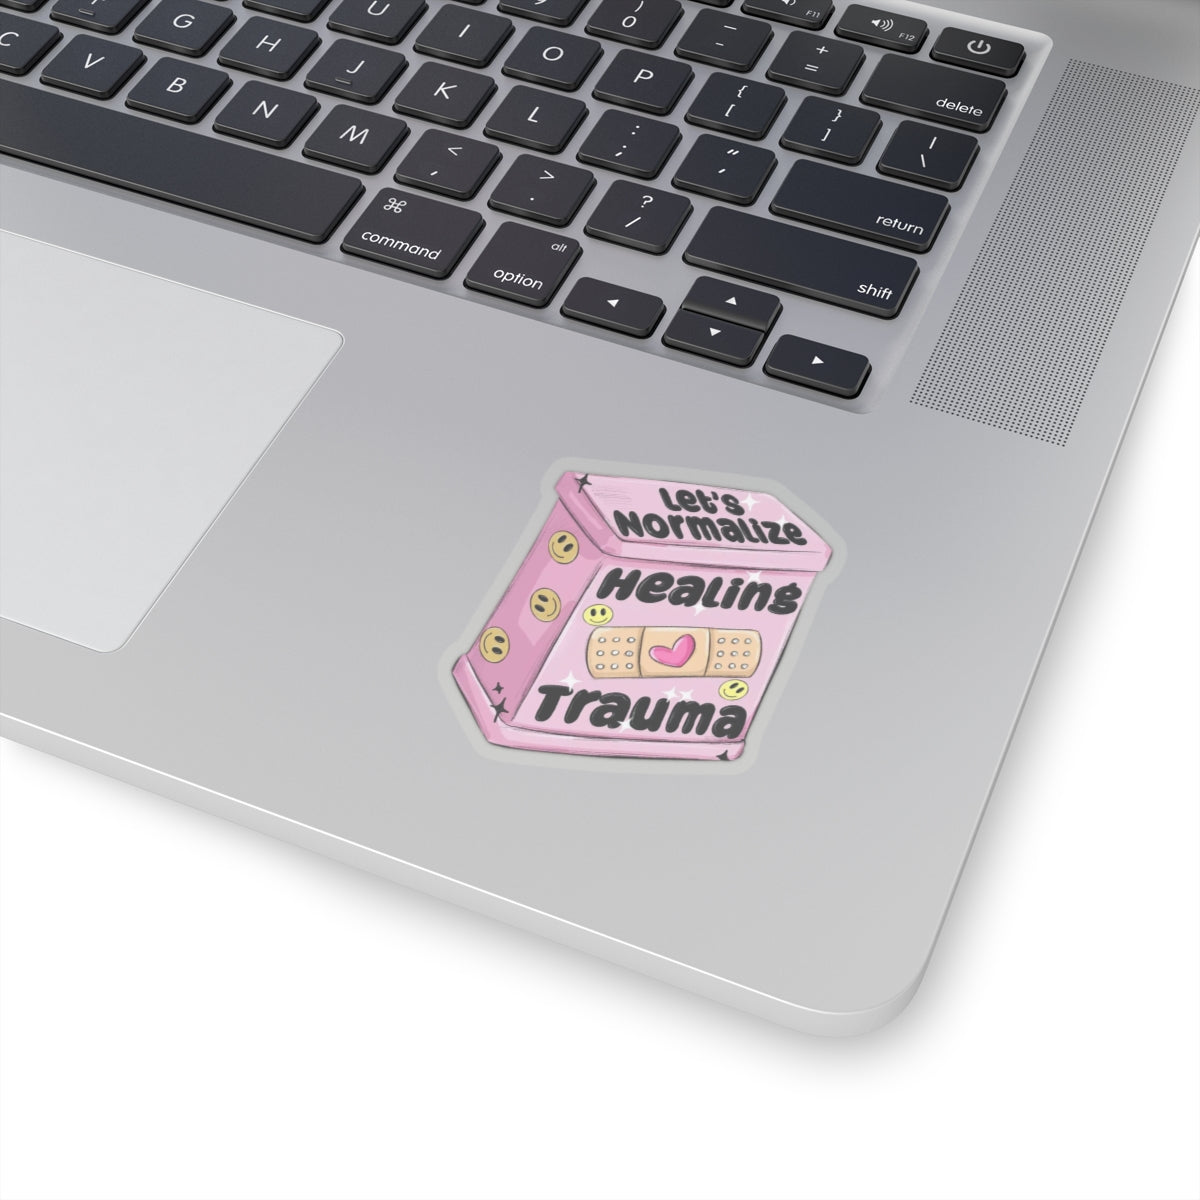 Normalize healing trauma Sticker